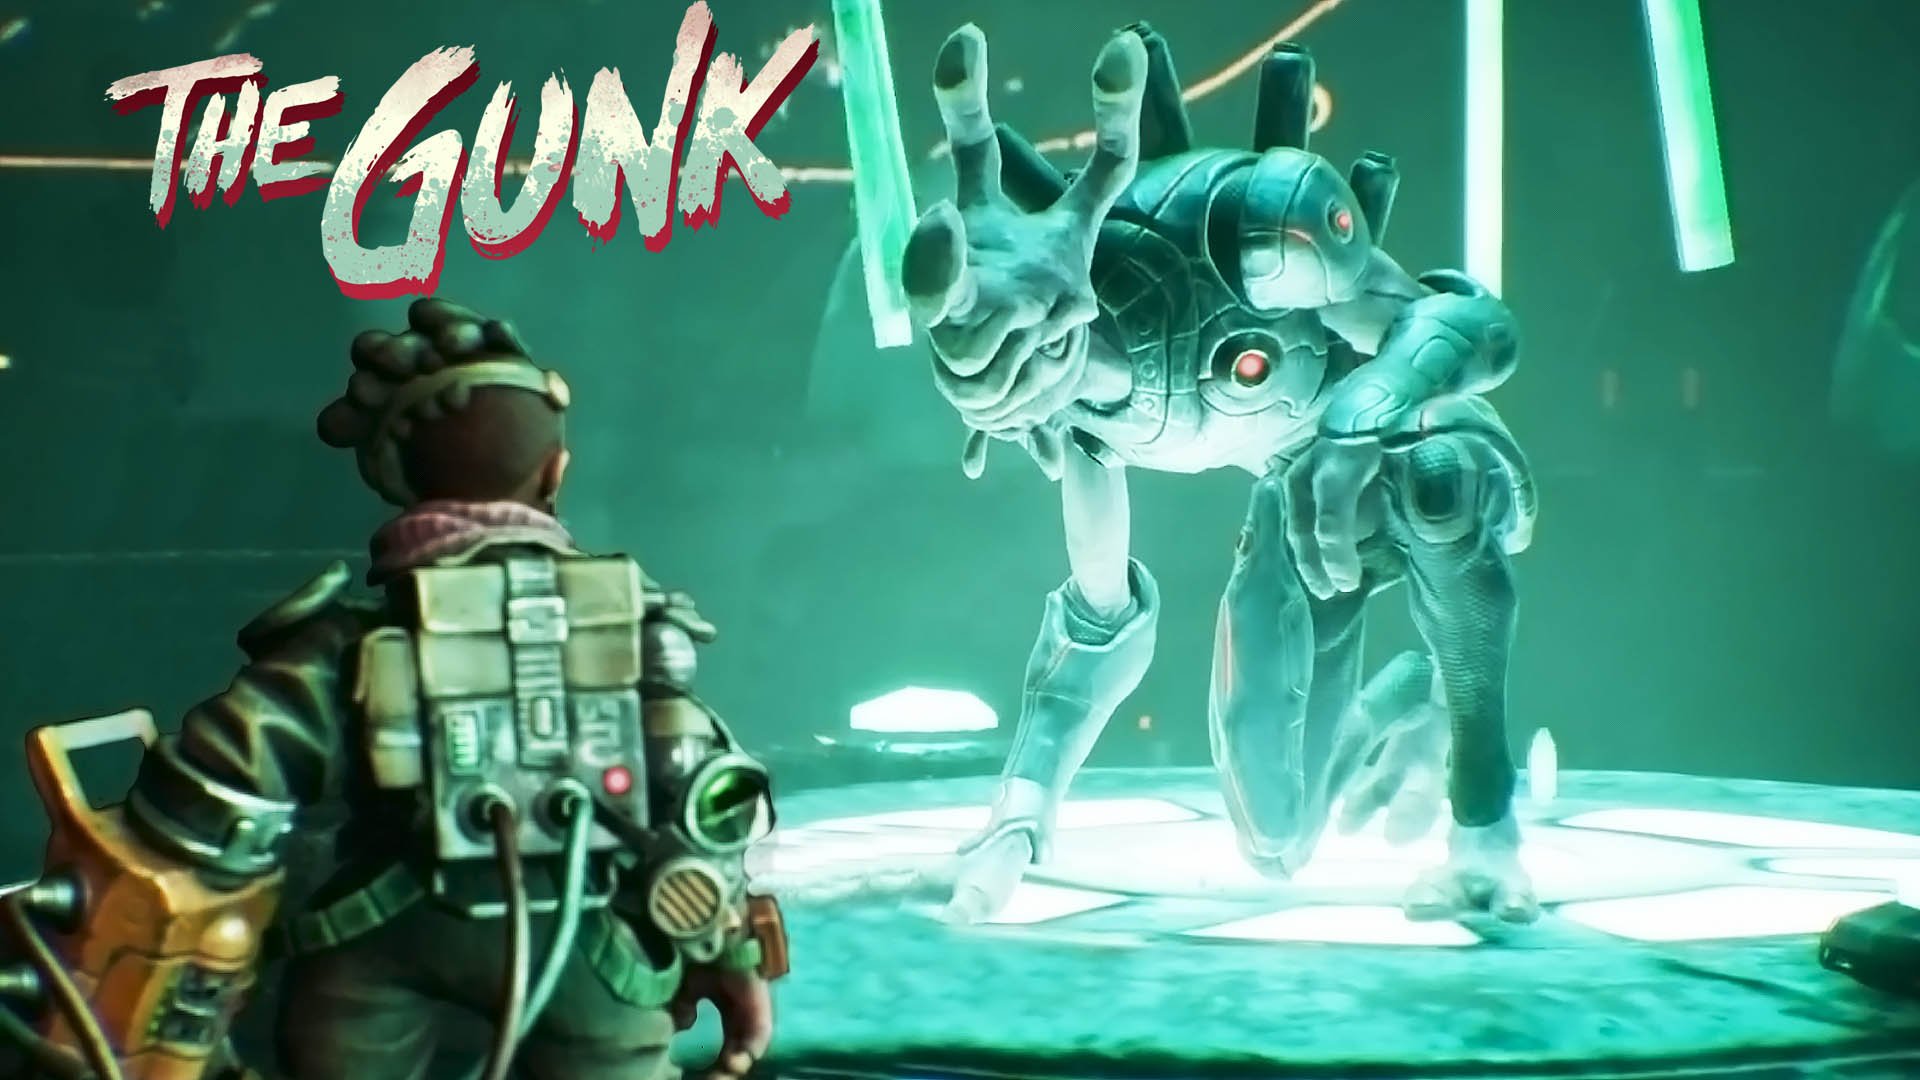 The Gunk / 8 глава / Воссоединение / Финал #7